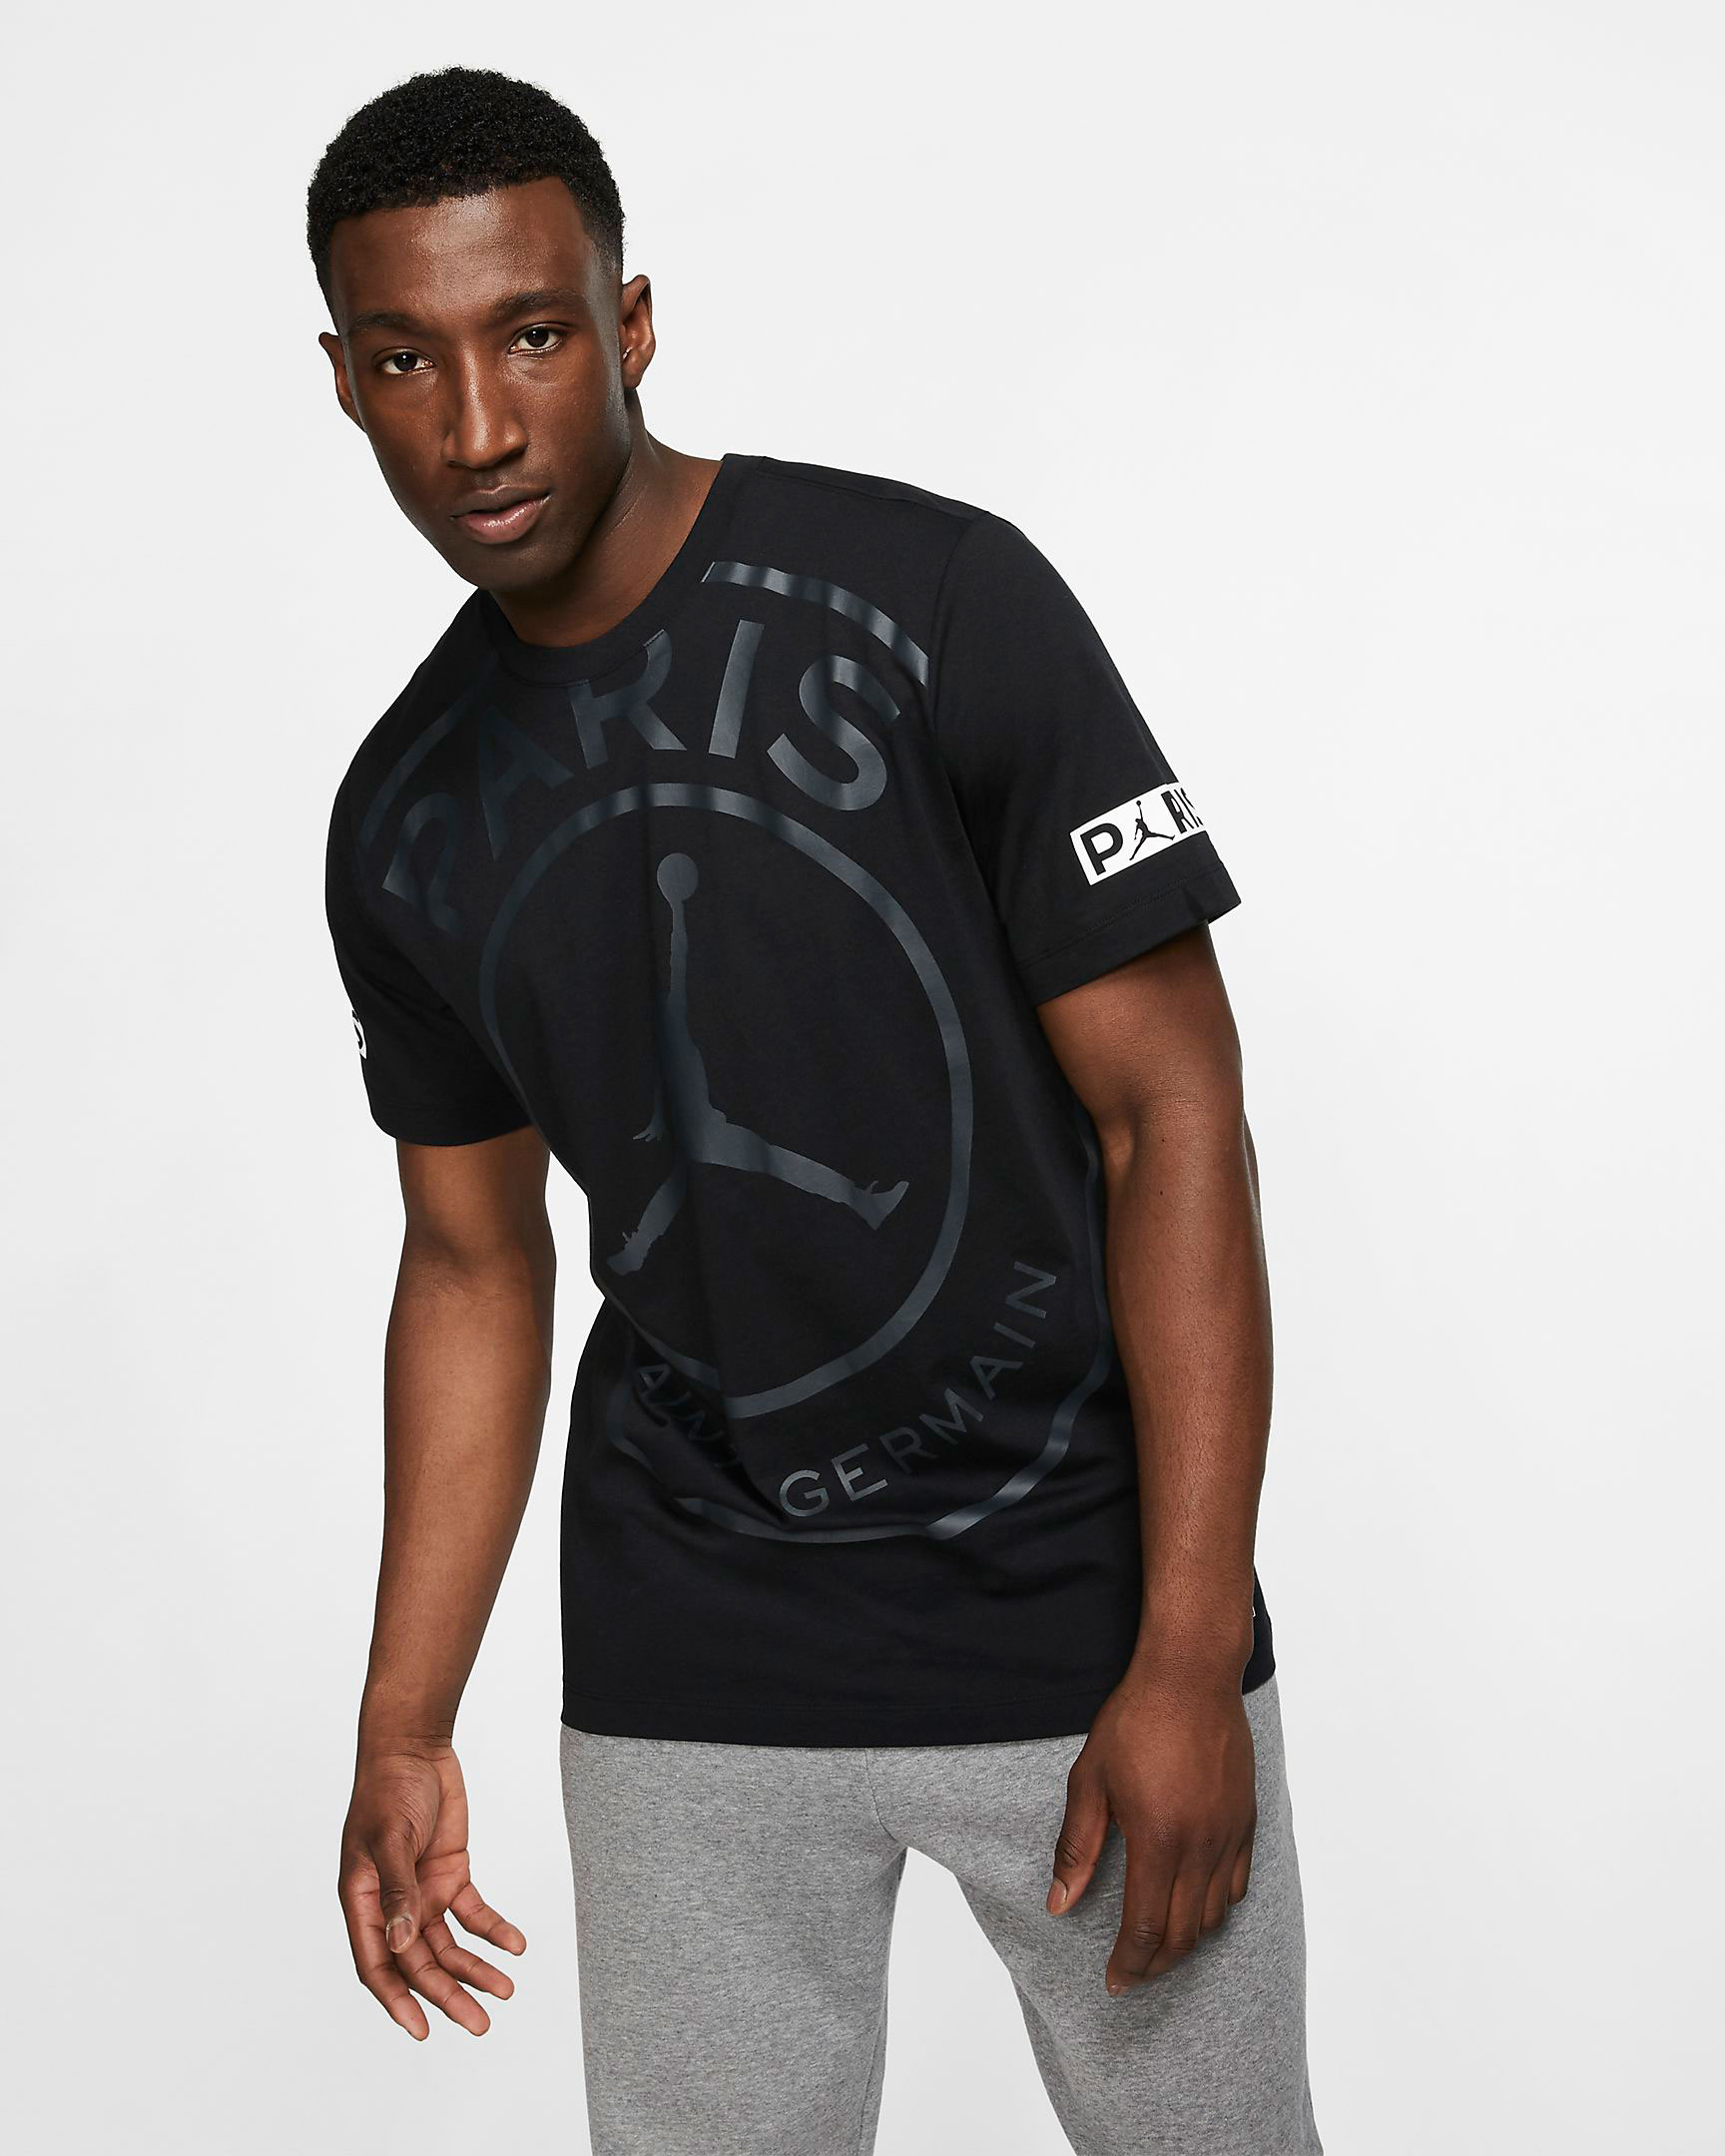 Jordan 6 PSG Paris Saint Germain Clothing | SneakerFits.com